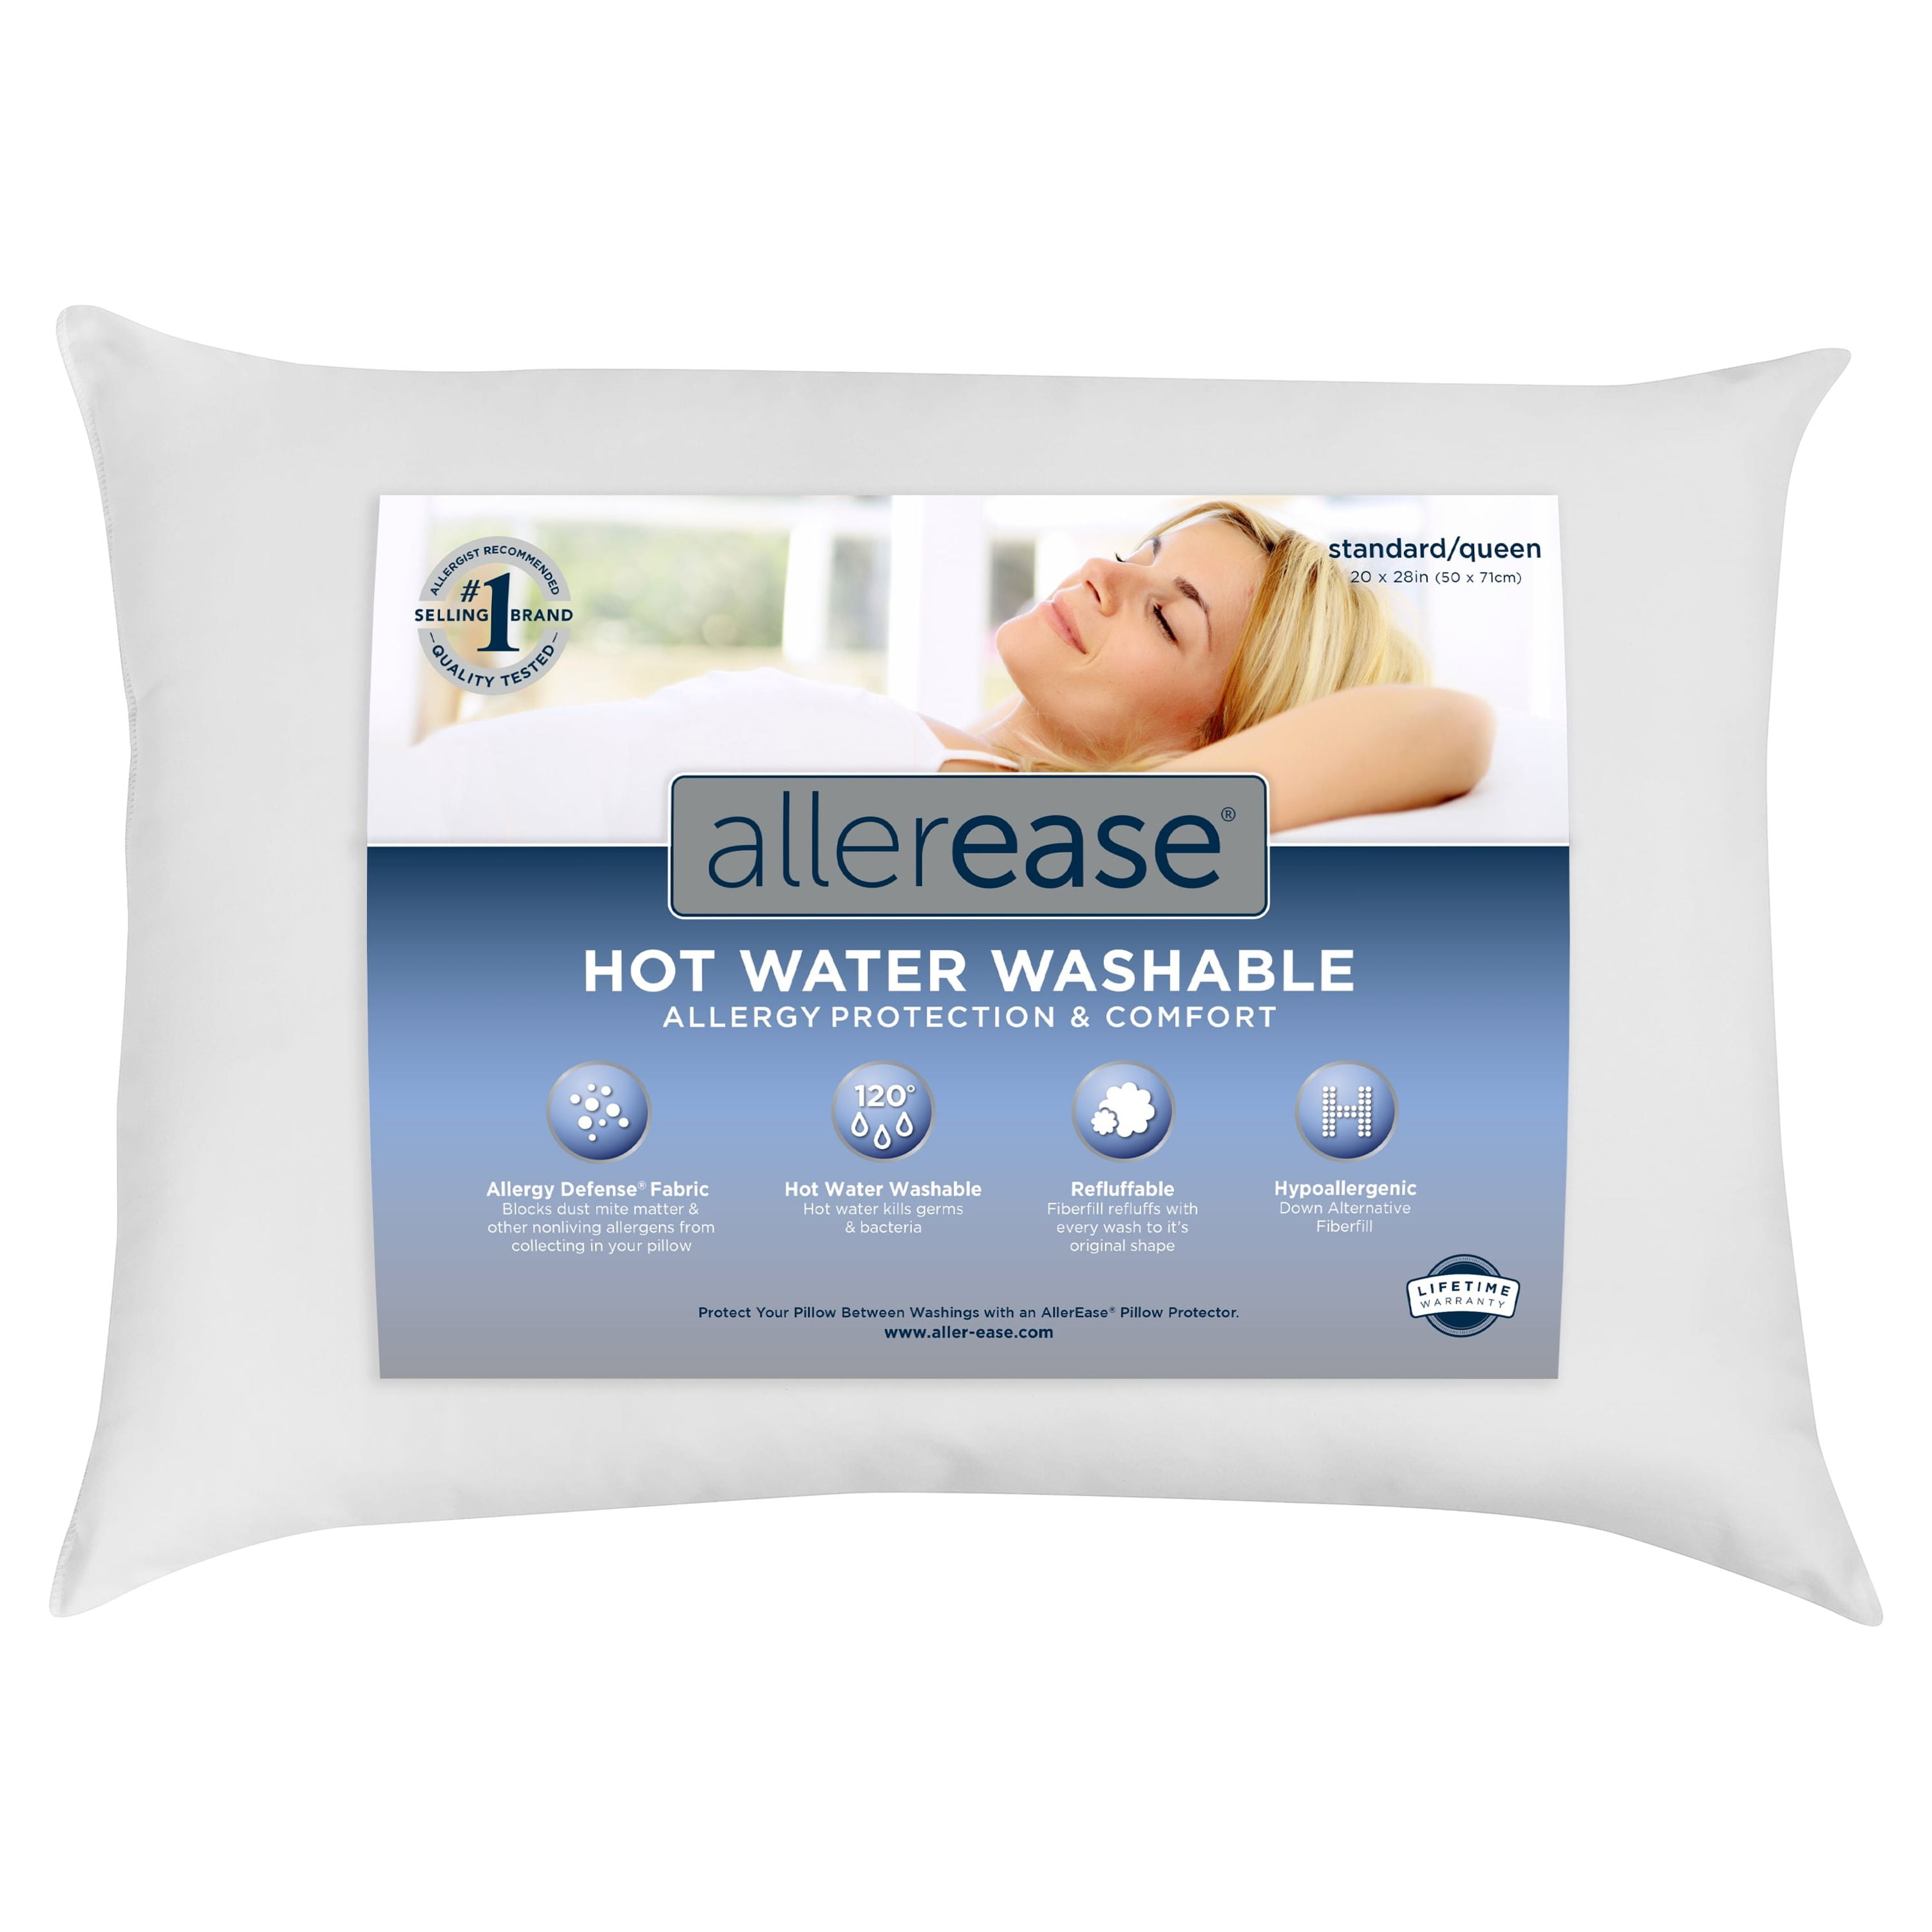 Chiroflow water pillow